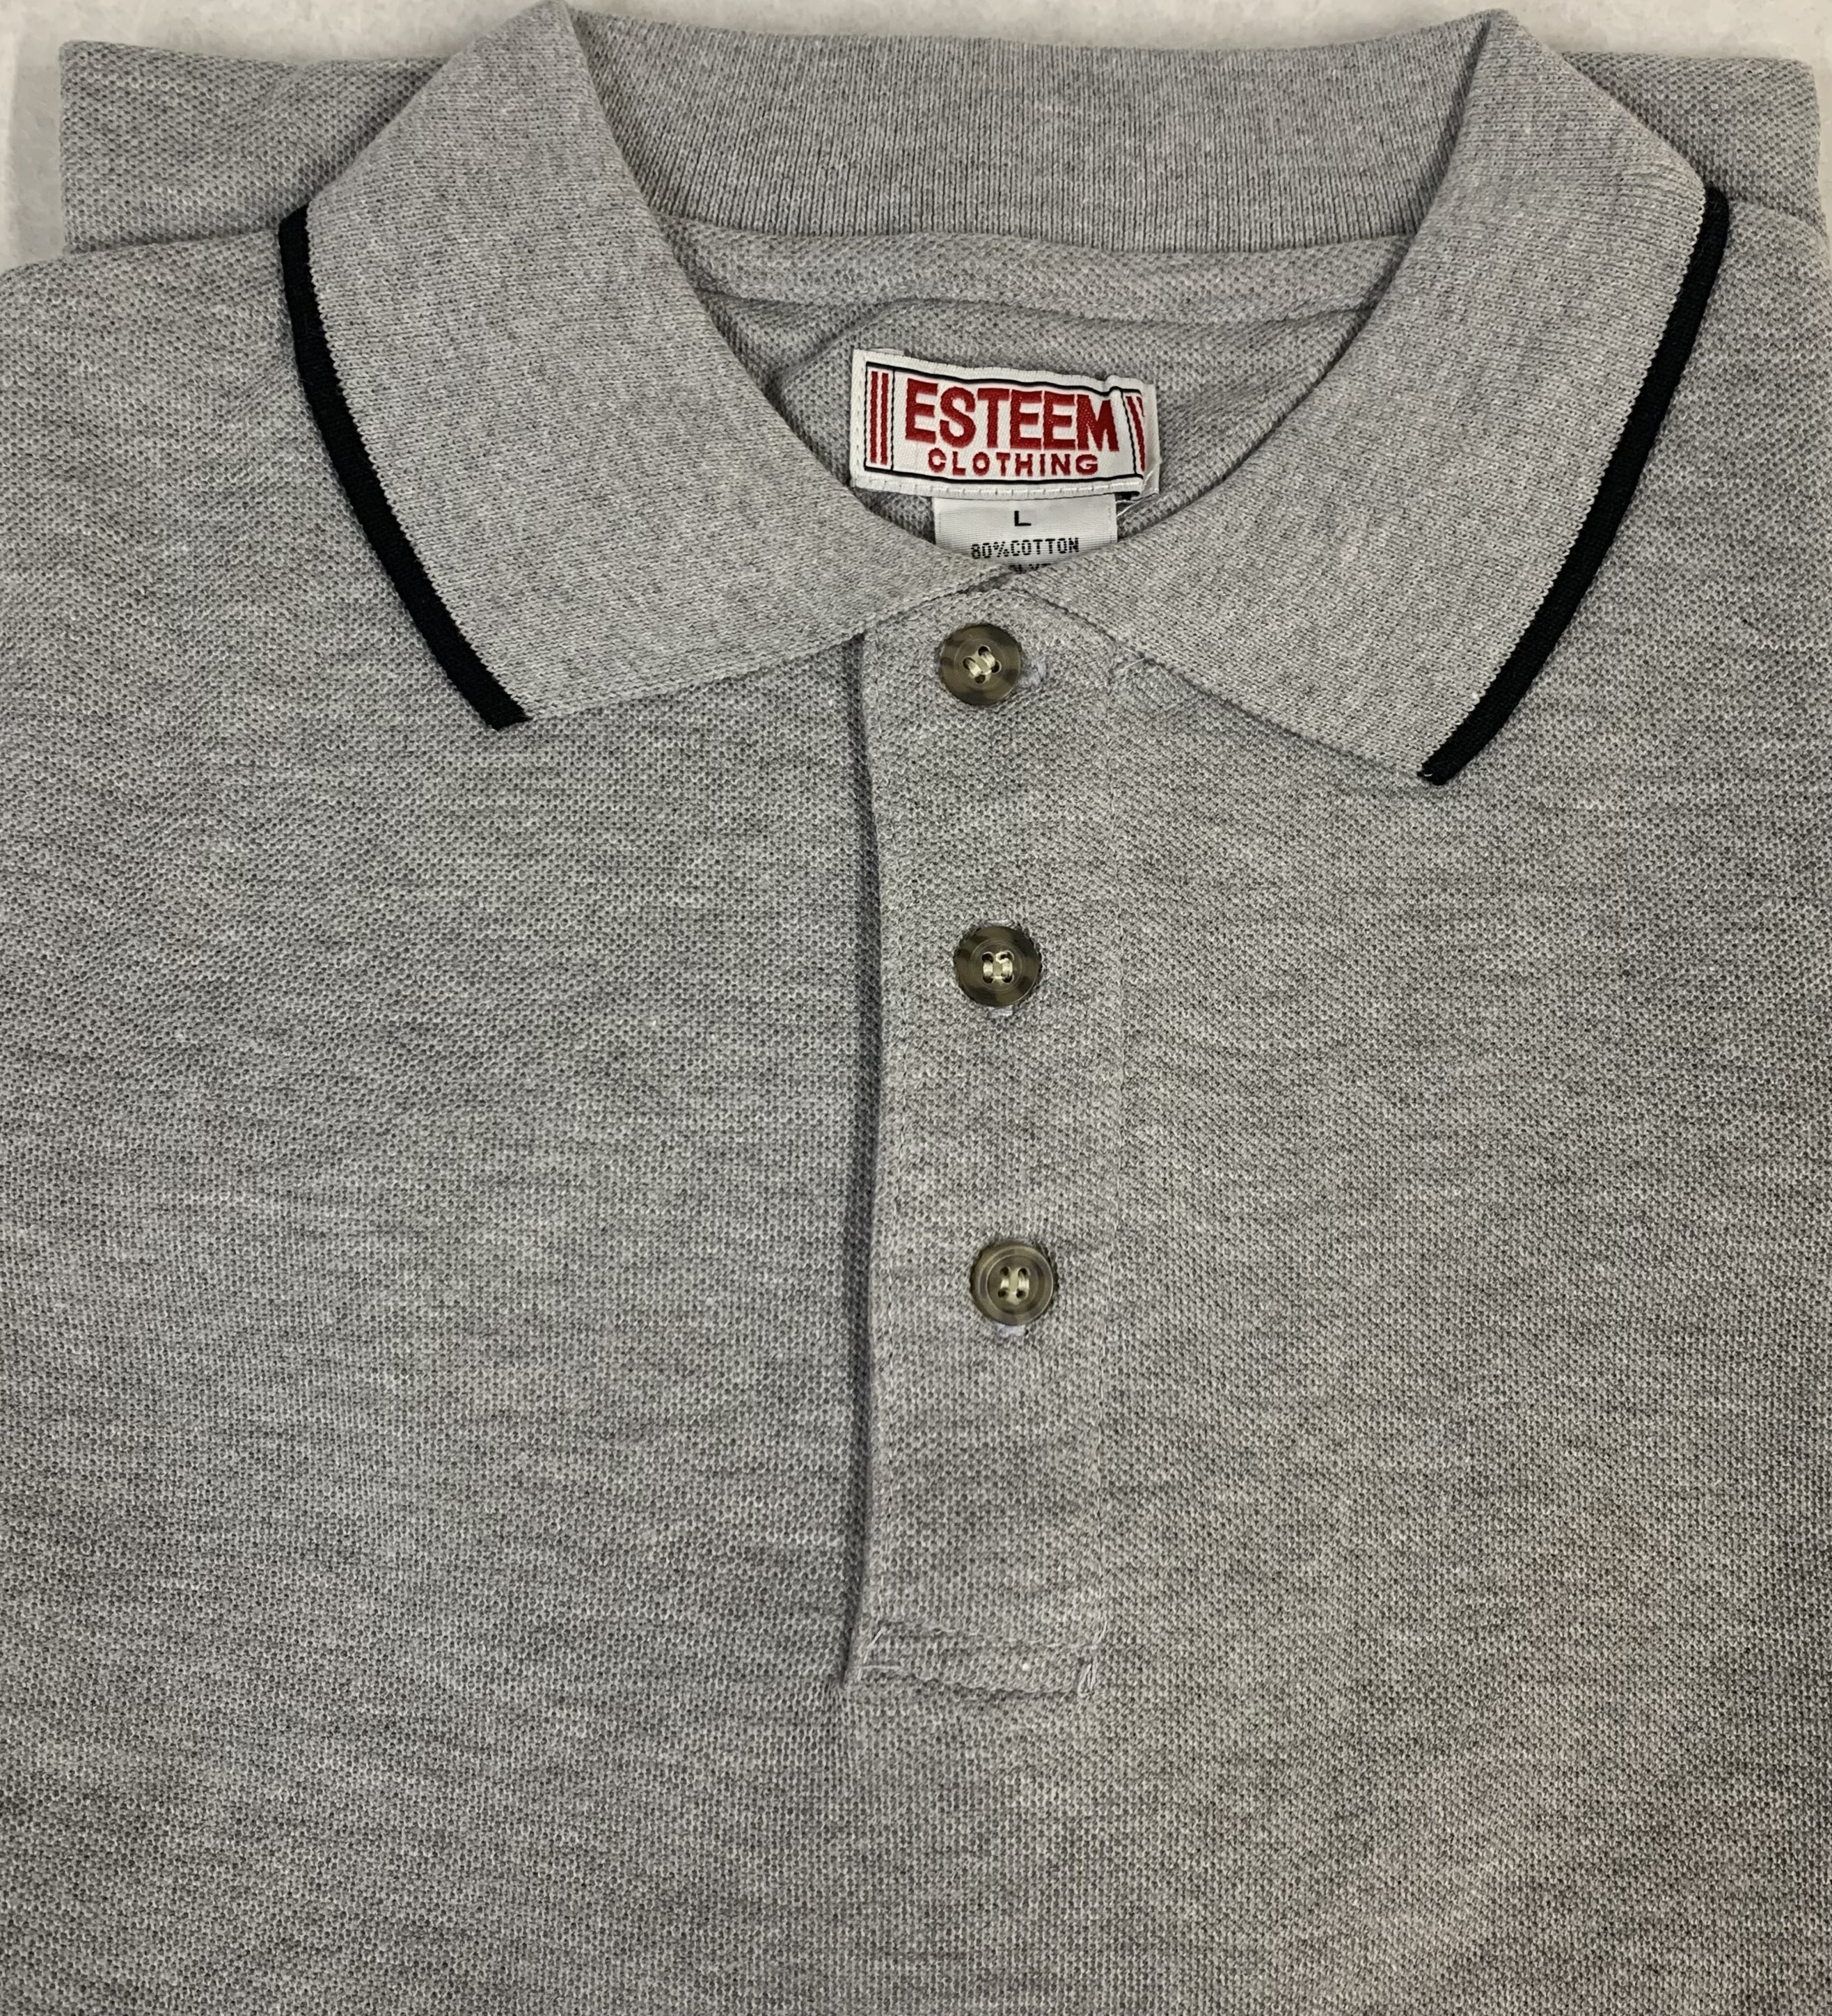 Short sleeve contrast collar/cuff pique golf shirt - grey color